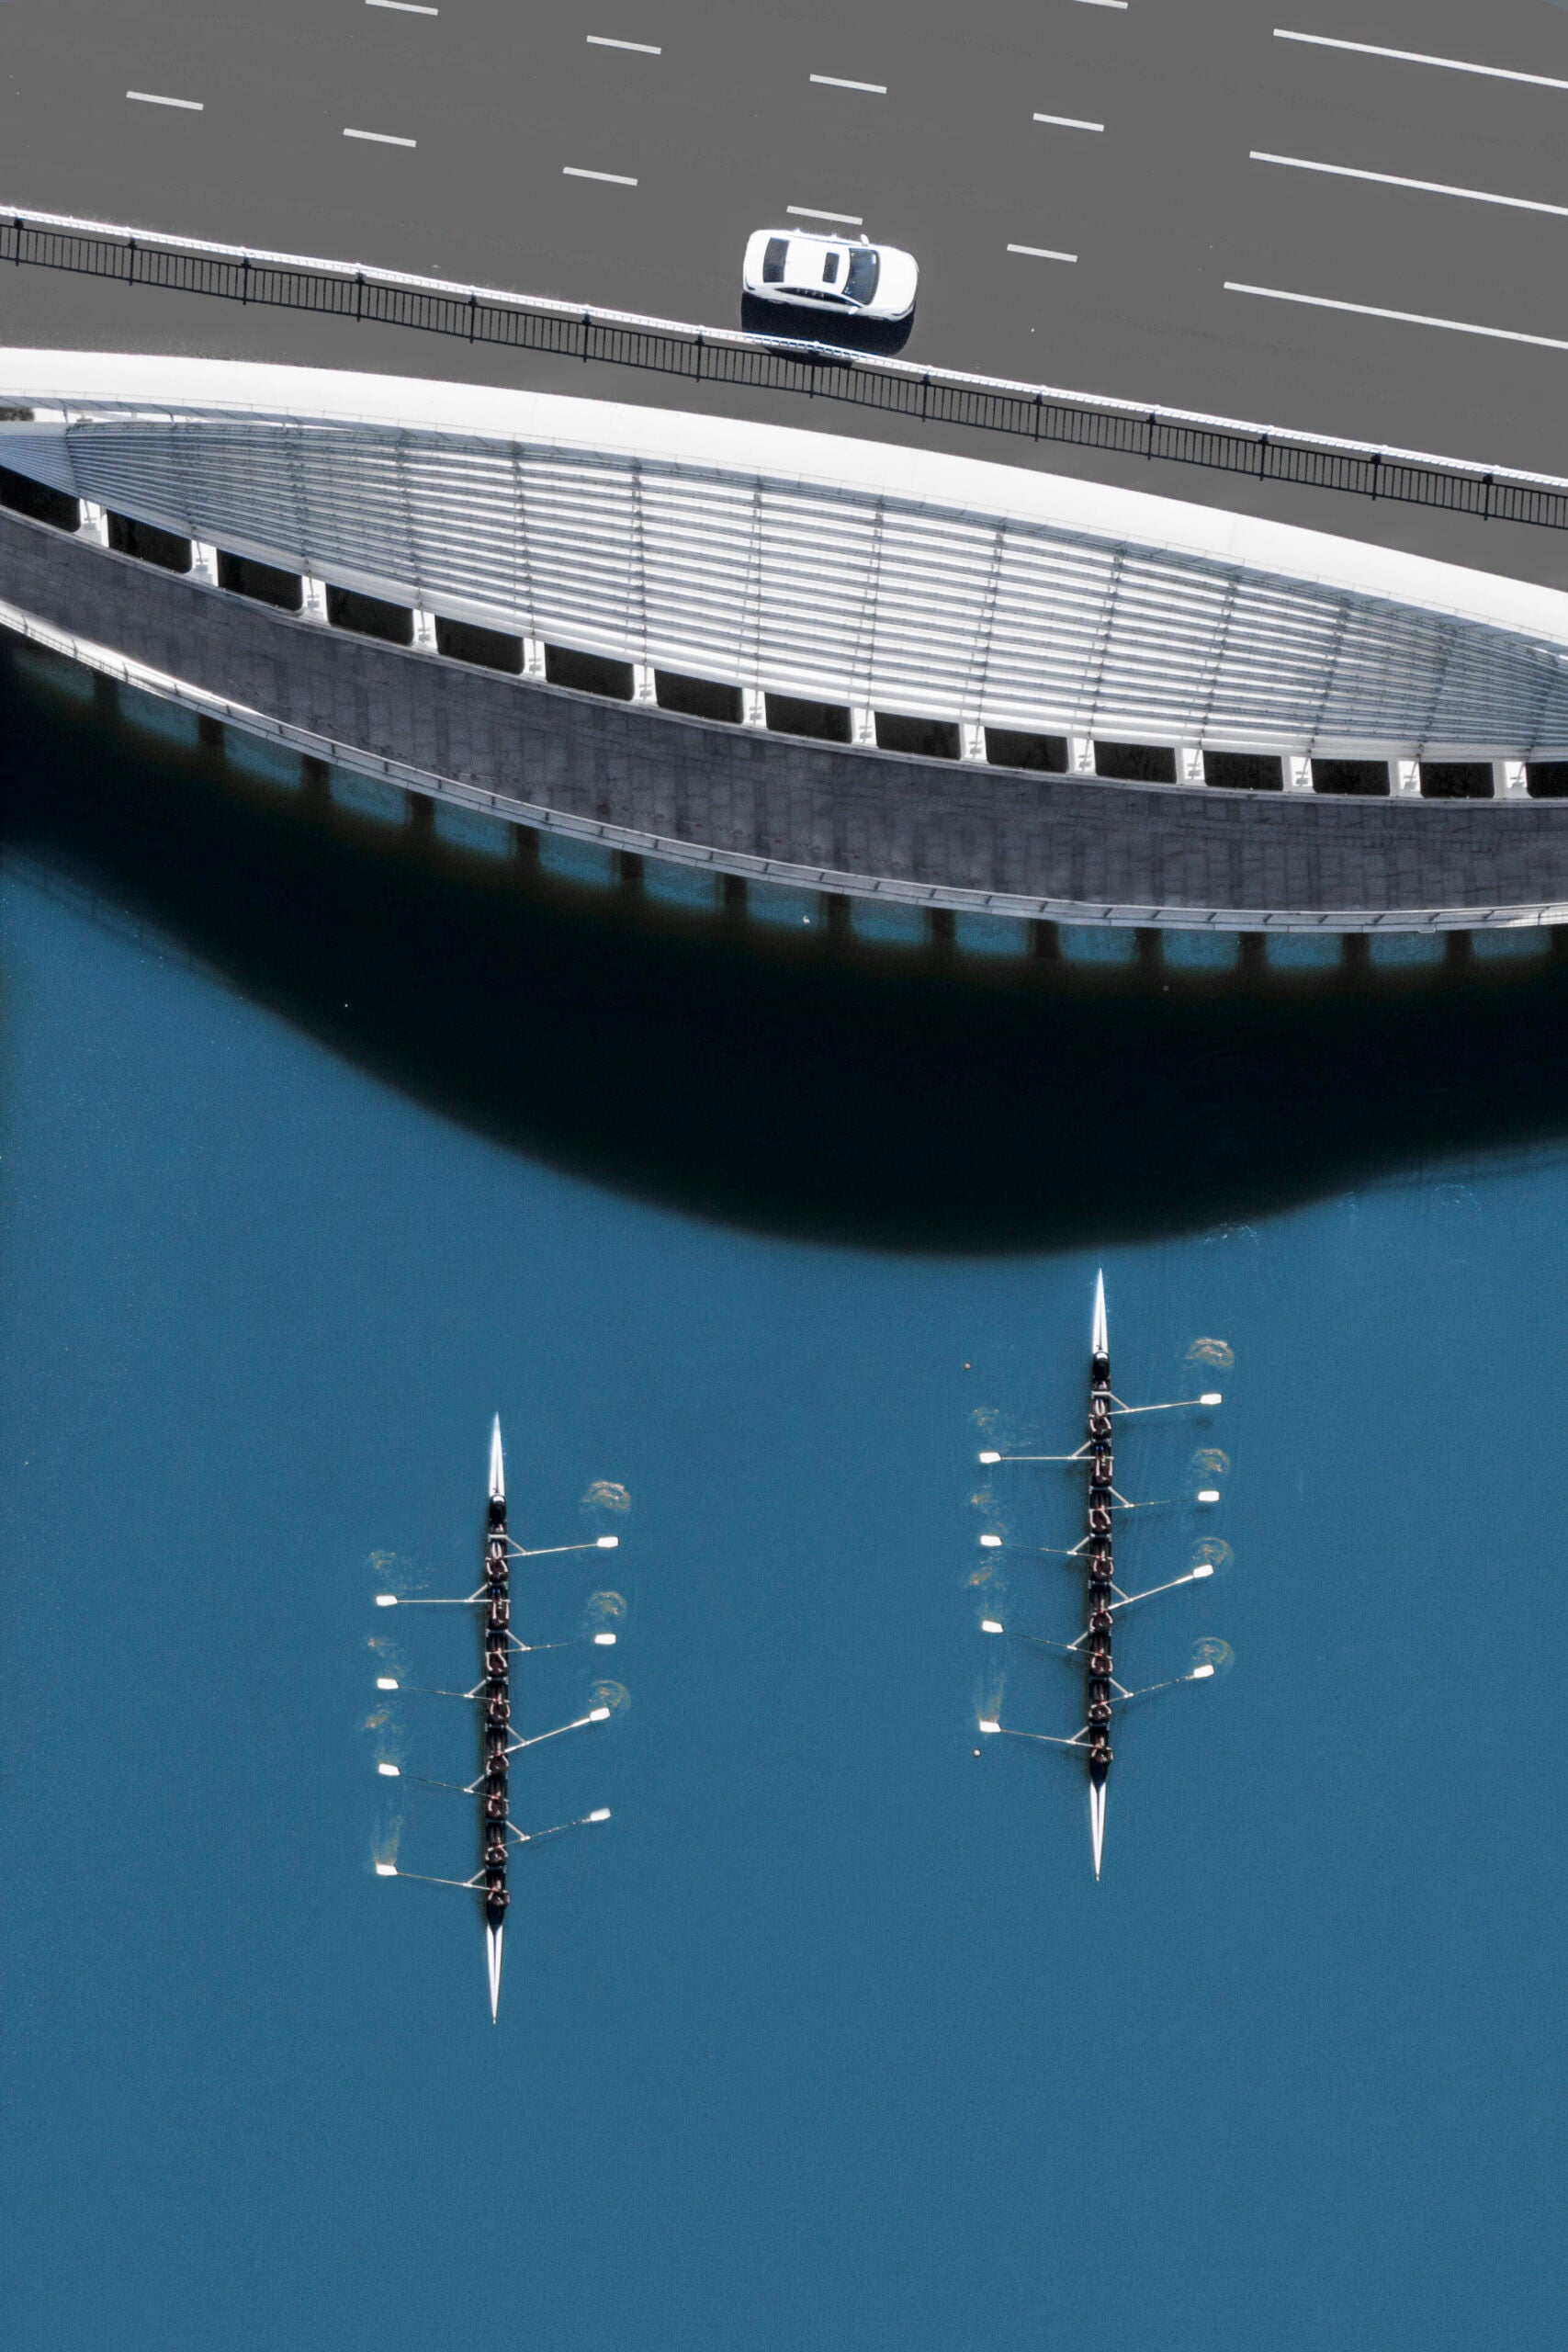 Two rowing boats racing towards a bridge.